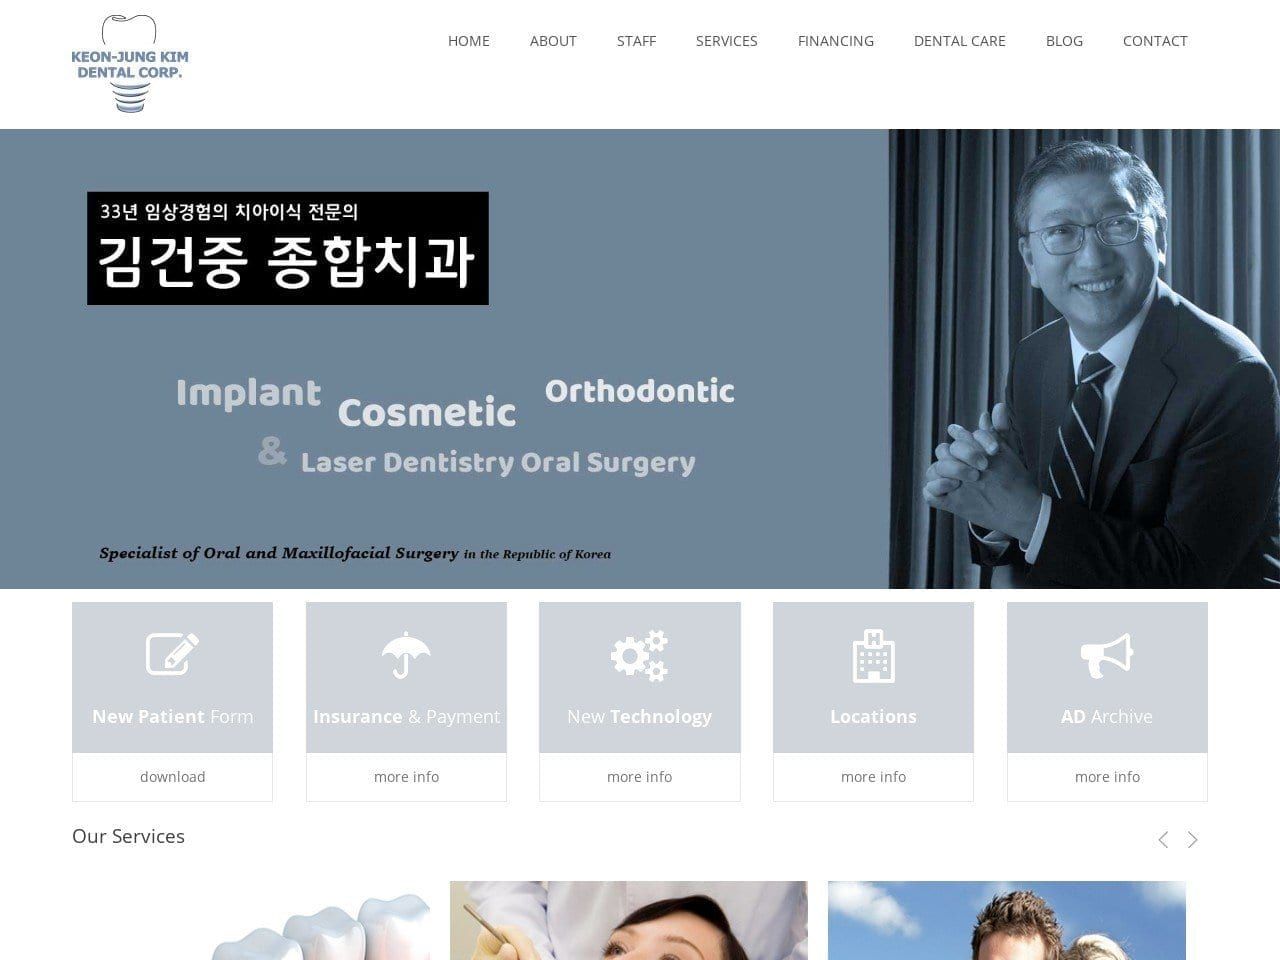 Keon Jung Kim Dental Corporation Website Screenshot from timkimdental.com